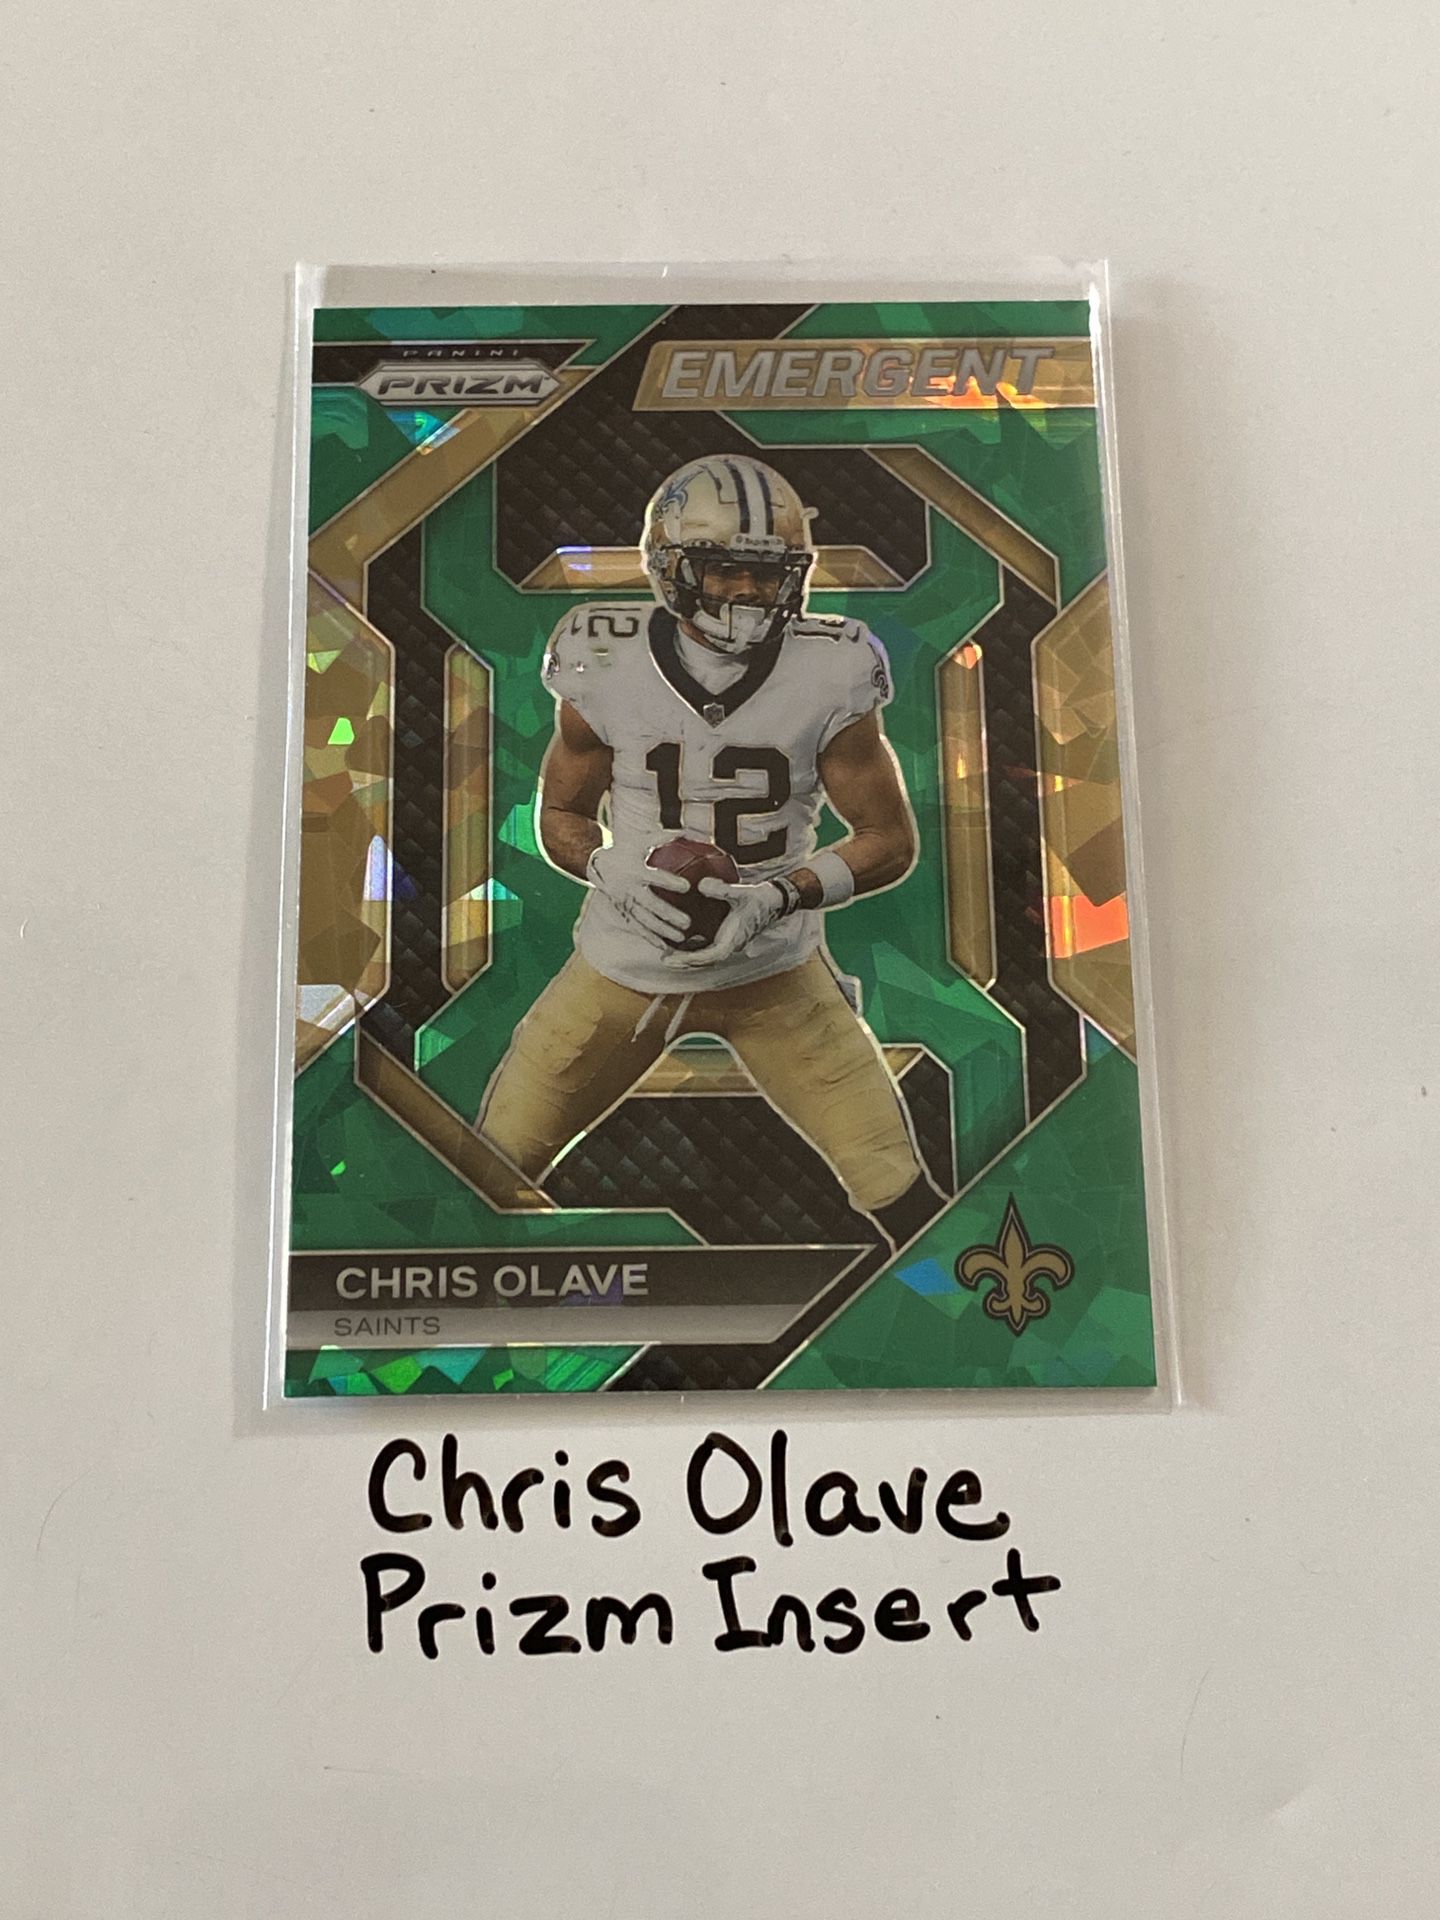 Chris Olave New Orleans Saints WR Prizm Short Print Insert Card. 